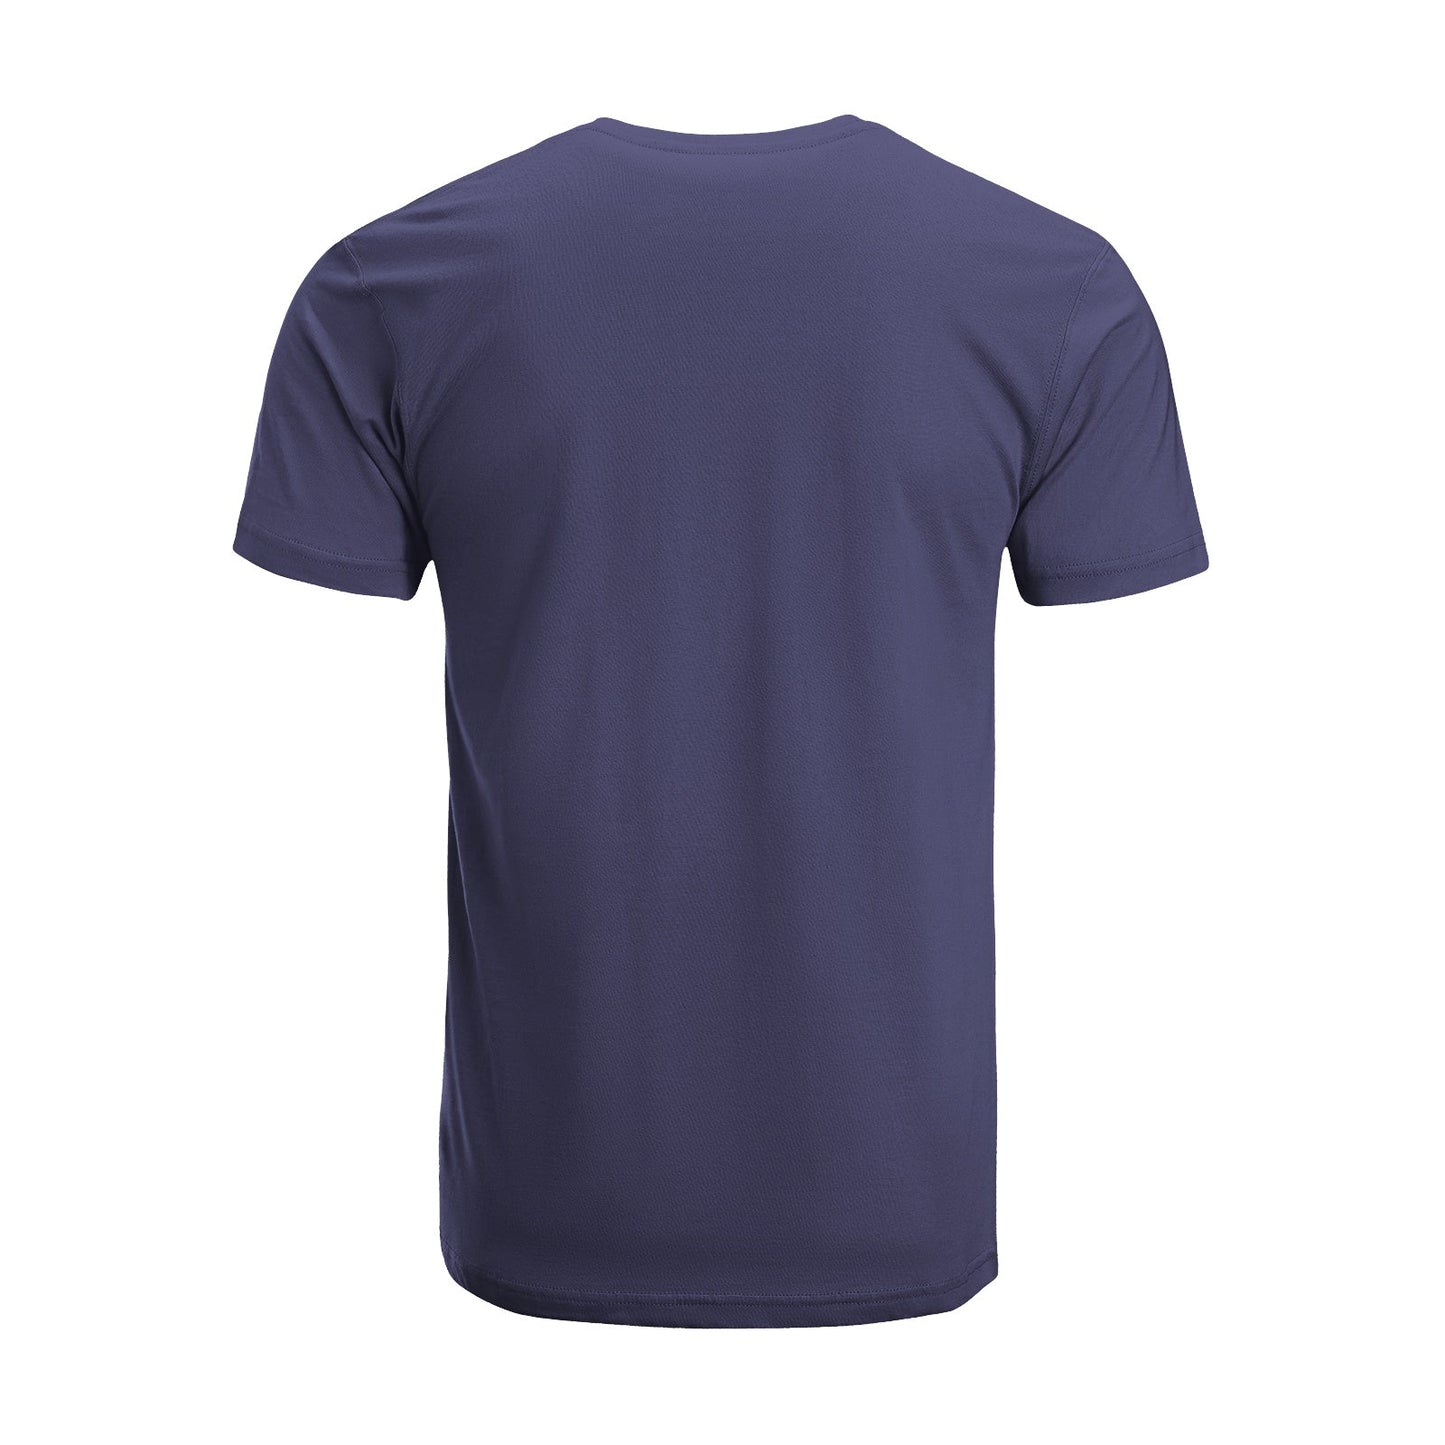 Unisex Short Sleeve Crew Neck Cotton Jersey T-Shirt USA 25